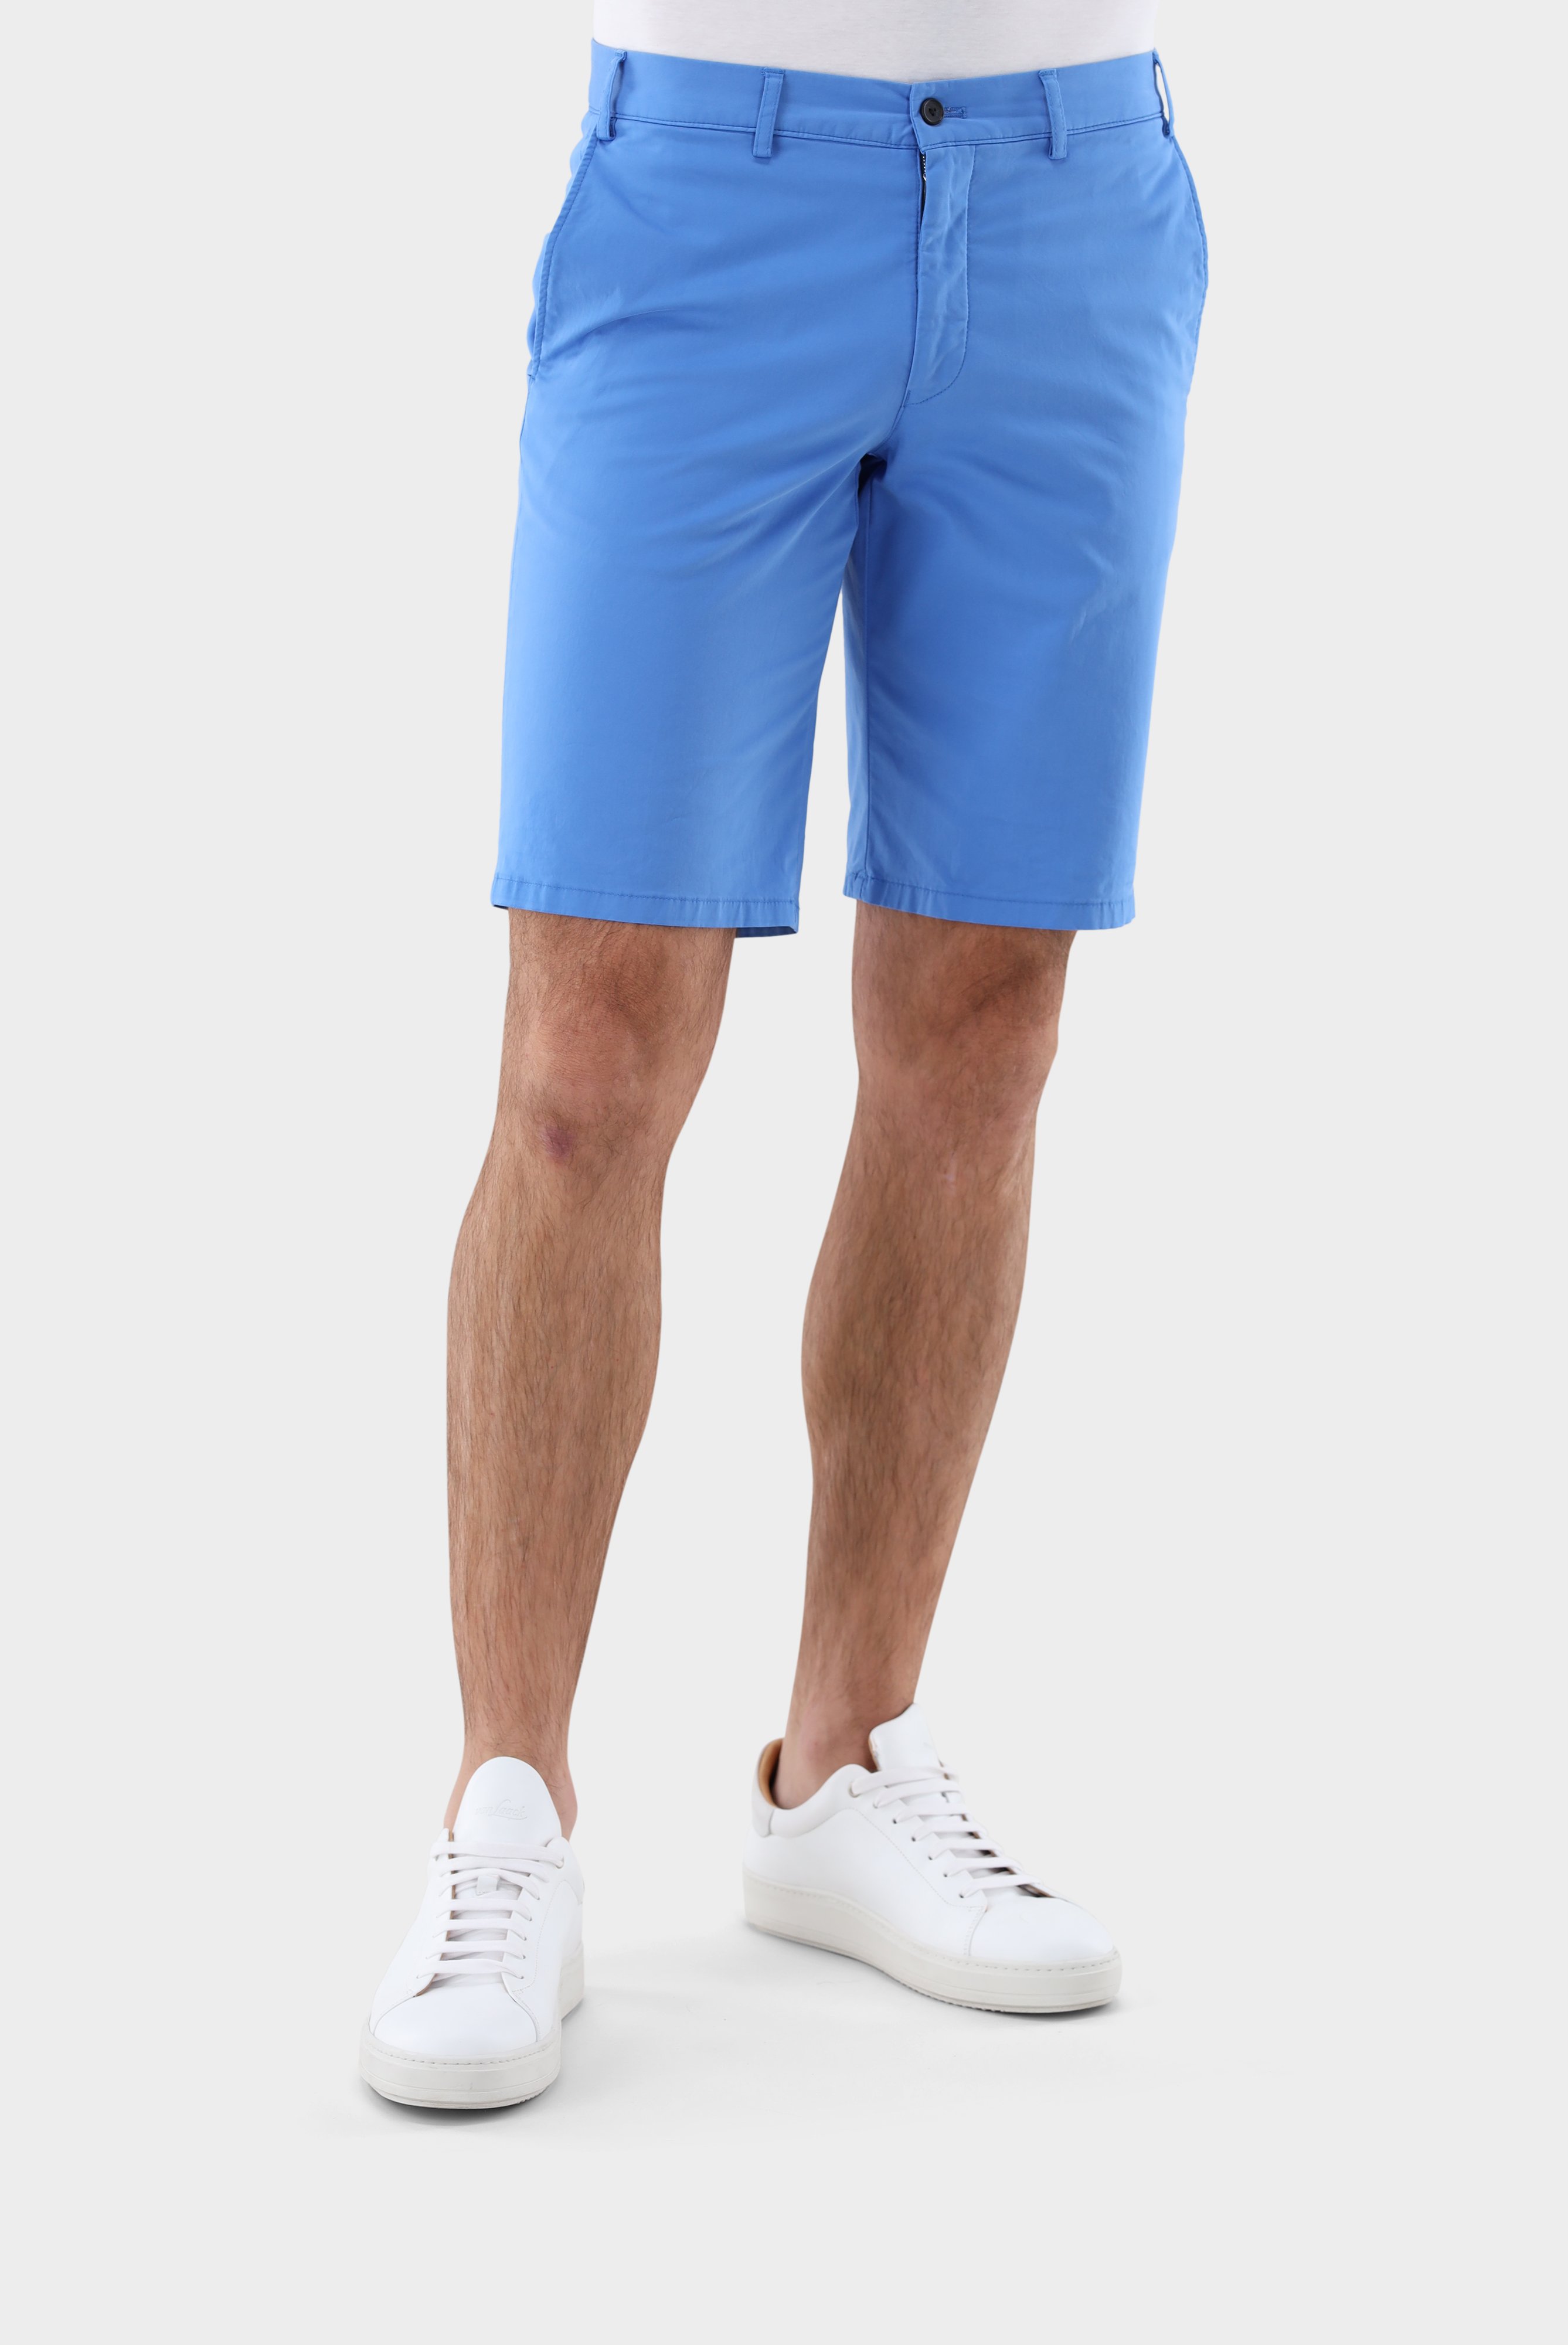 Men''s Bermuda shorts